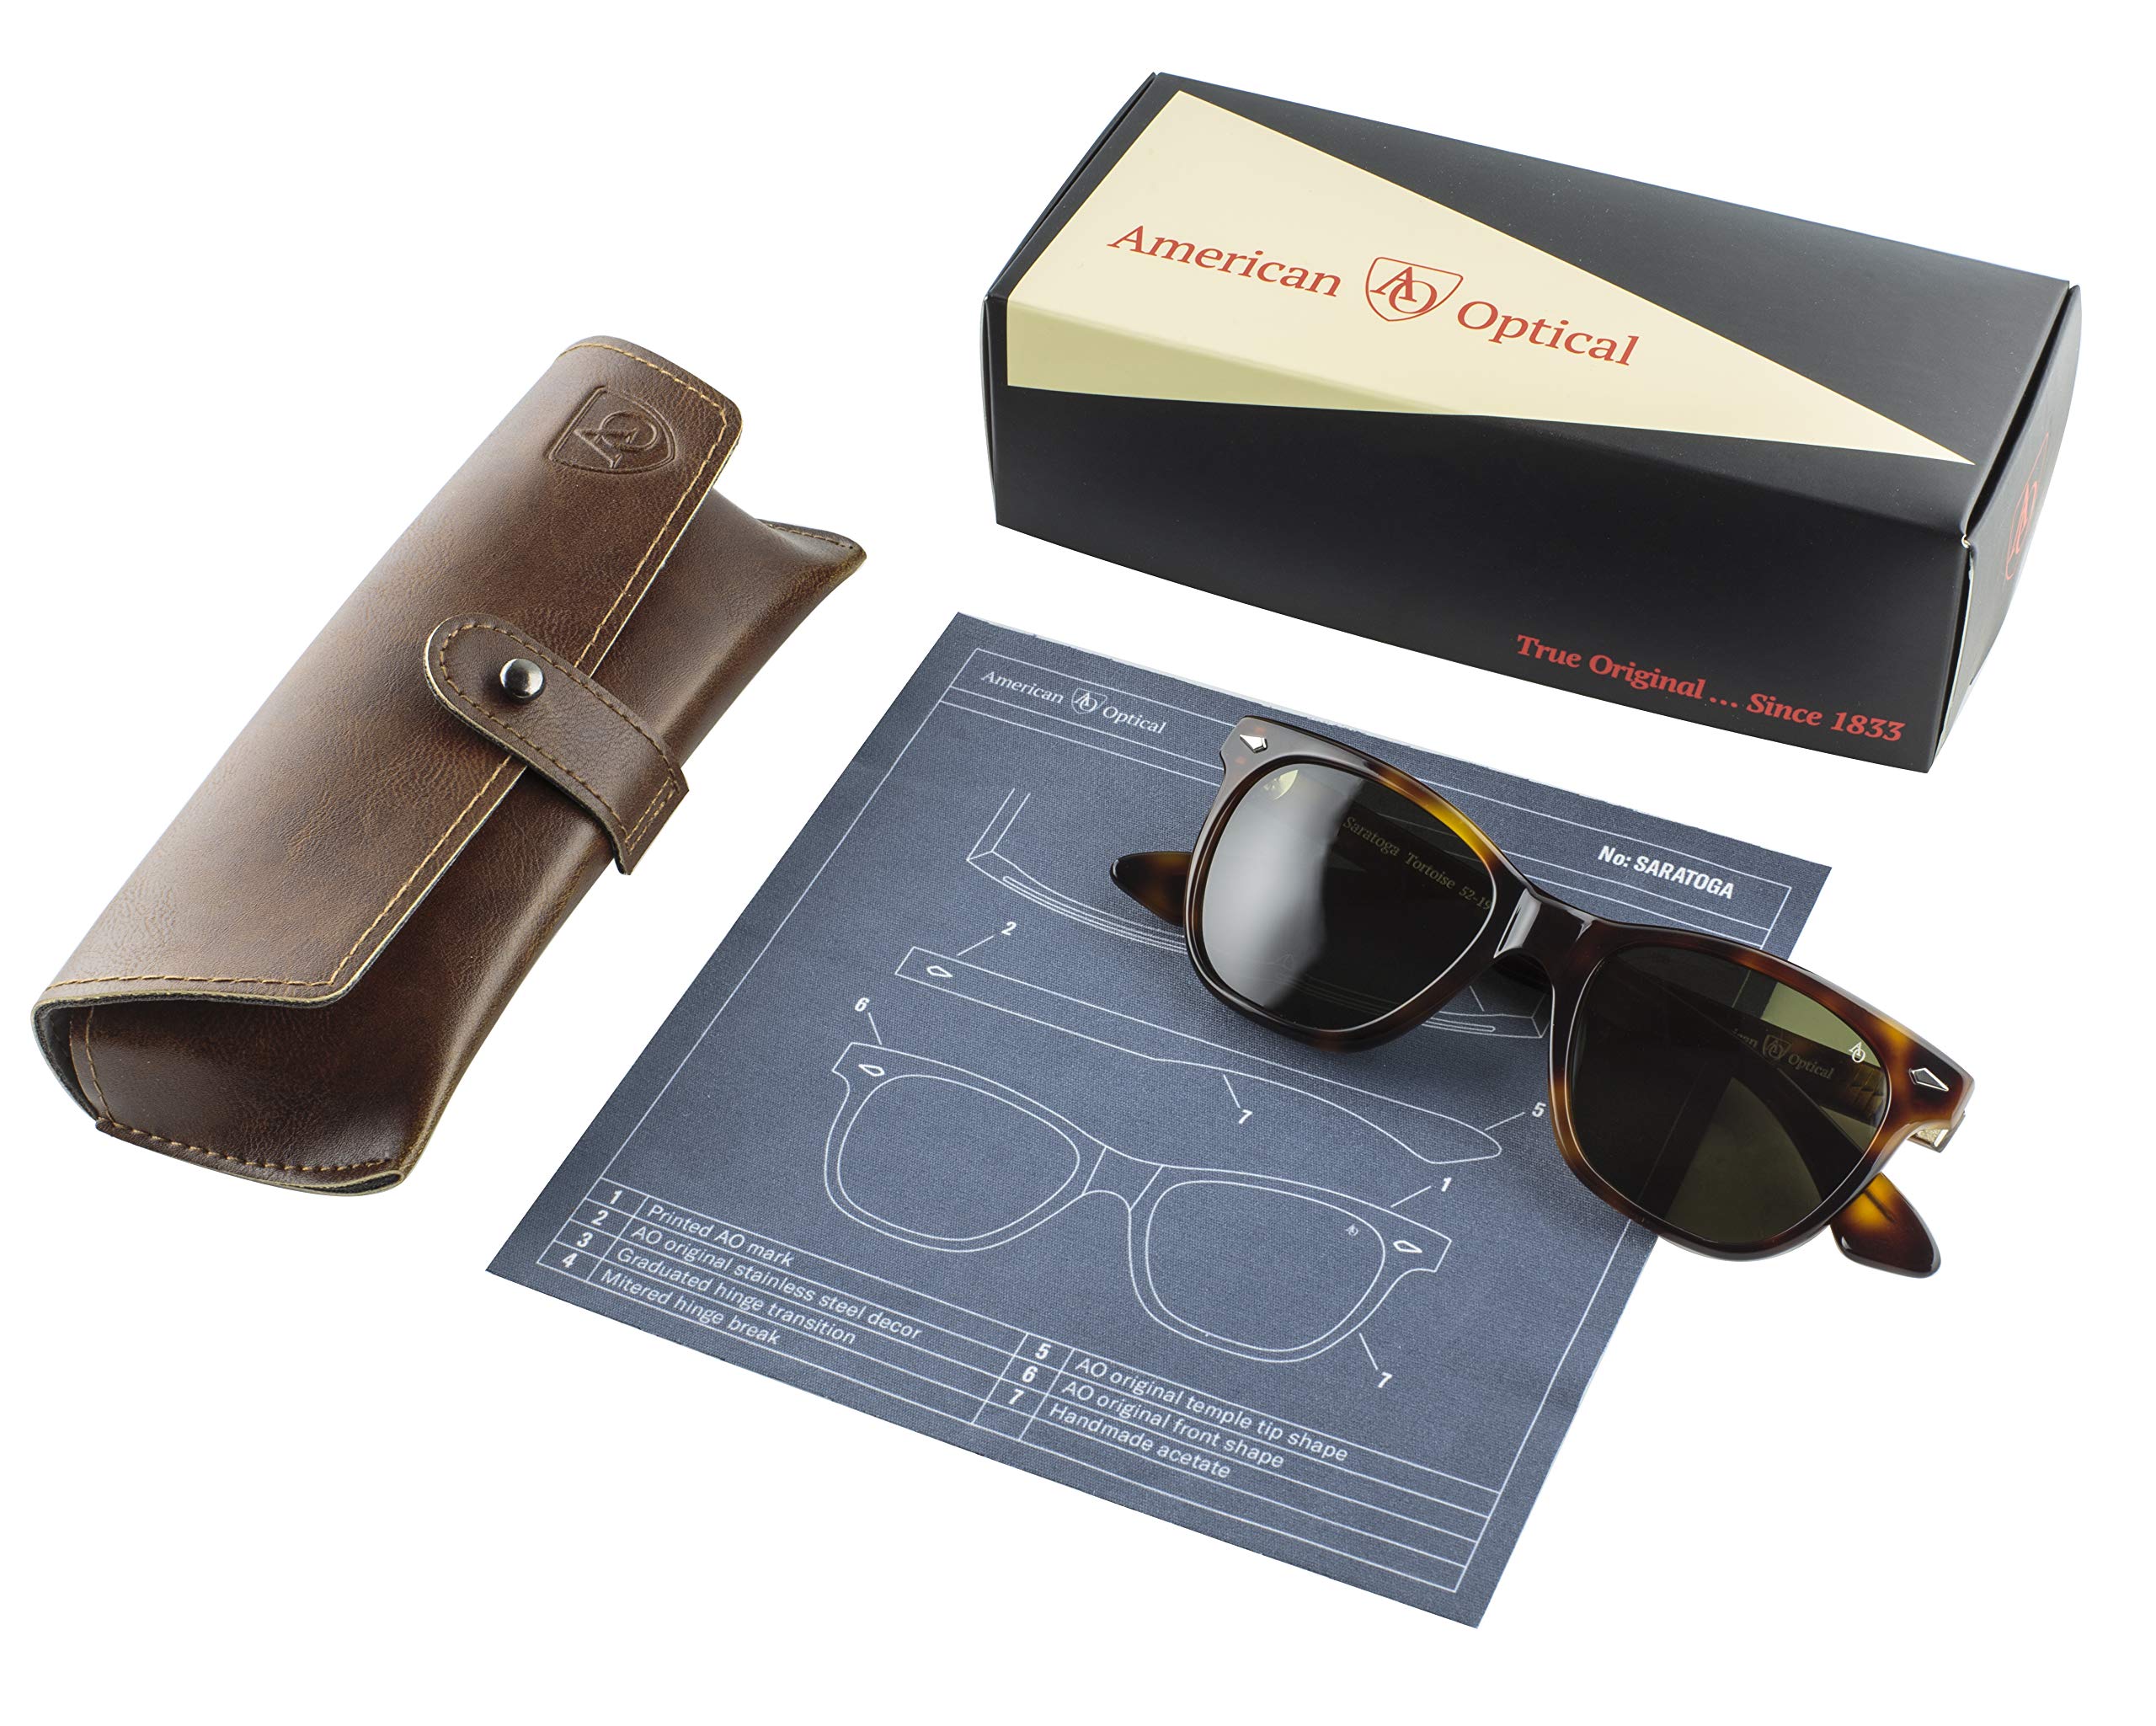 AO Saratoga Sunglasses - Black - True Color Gray AOLite Nylon Lenses - 52-19-145